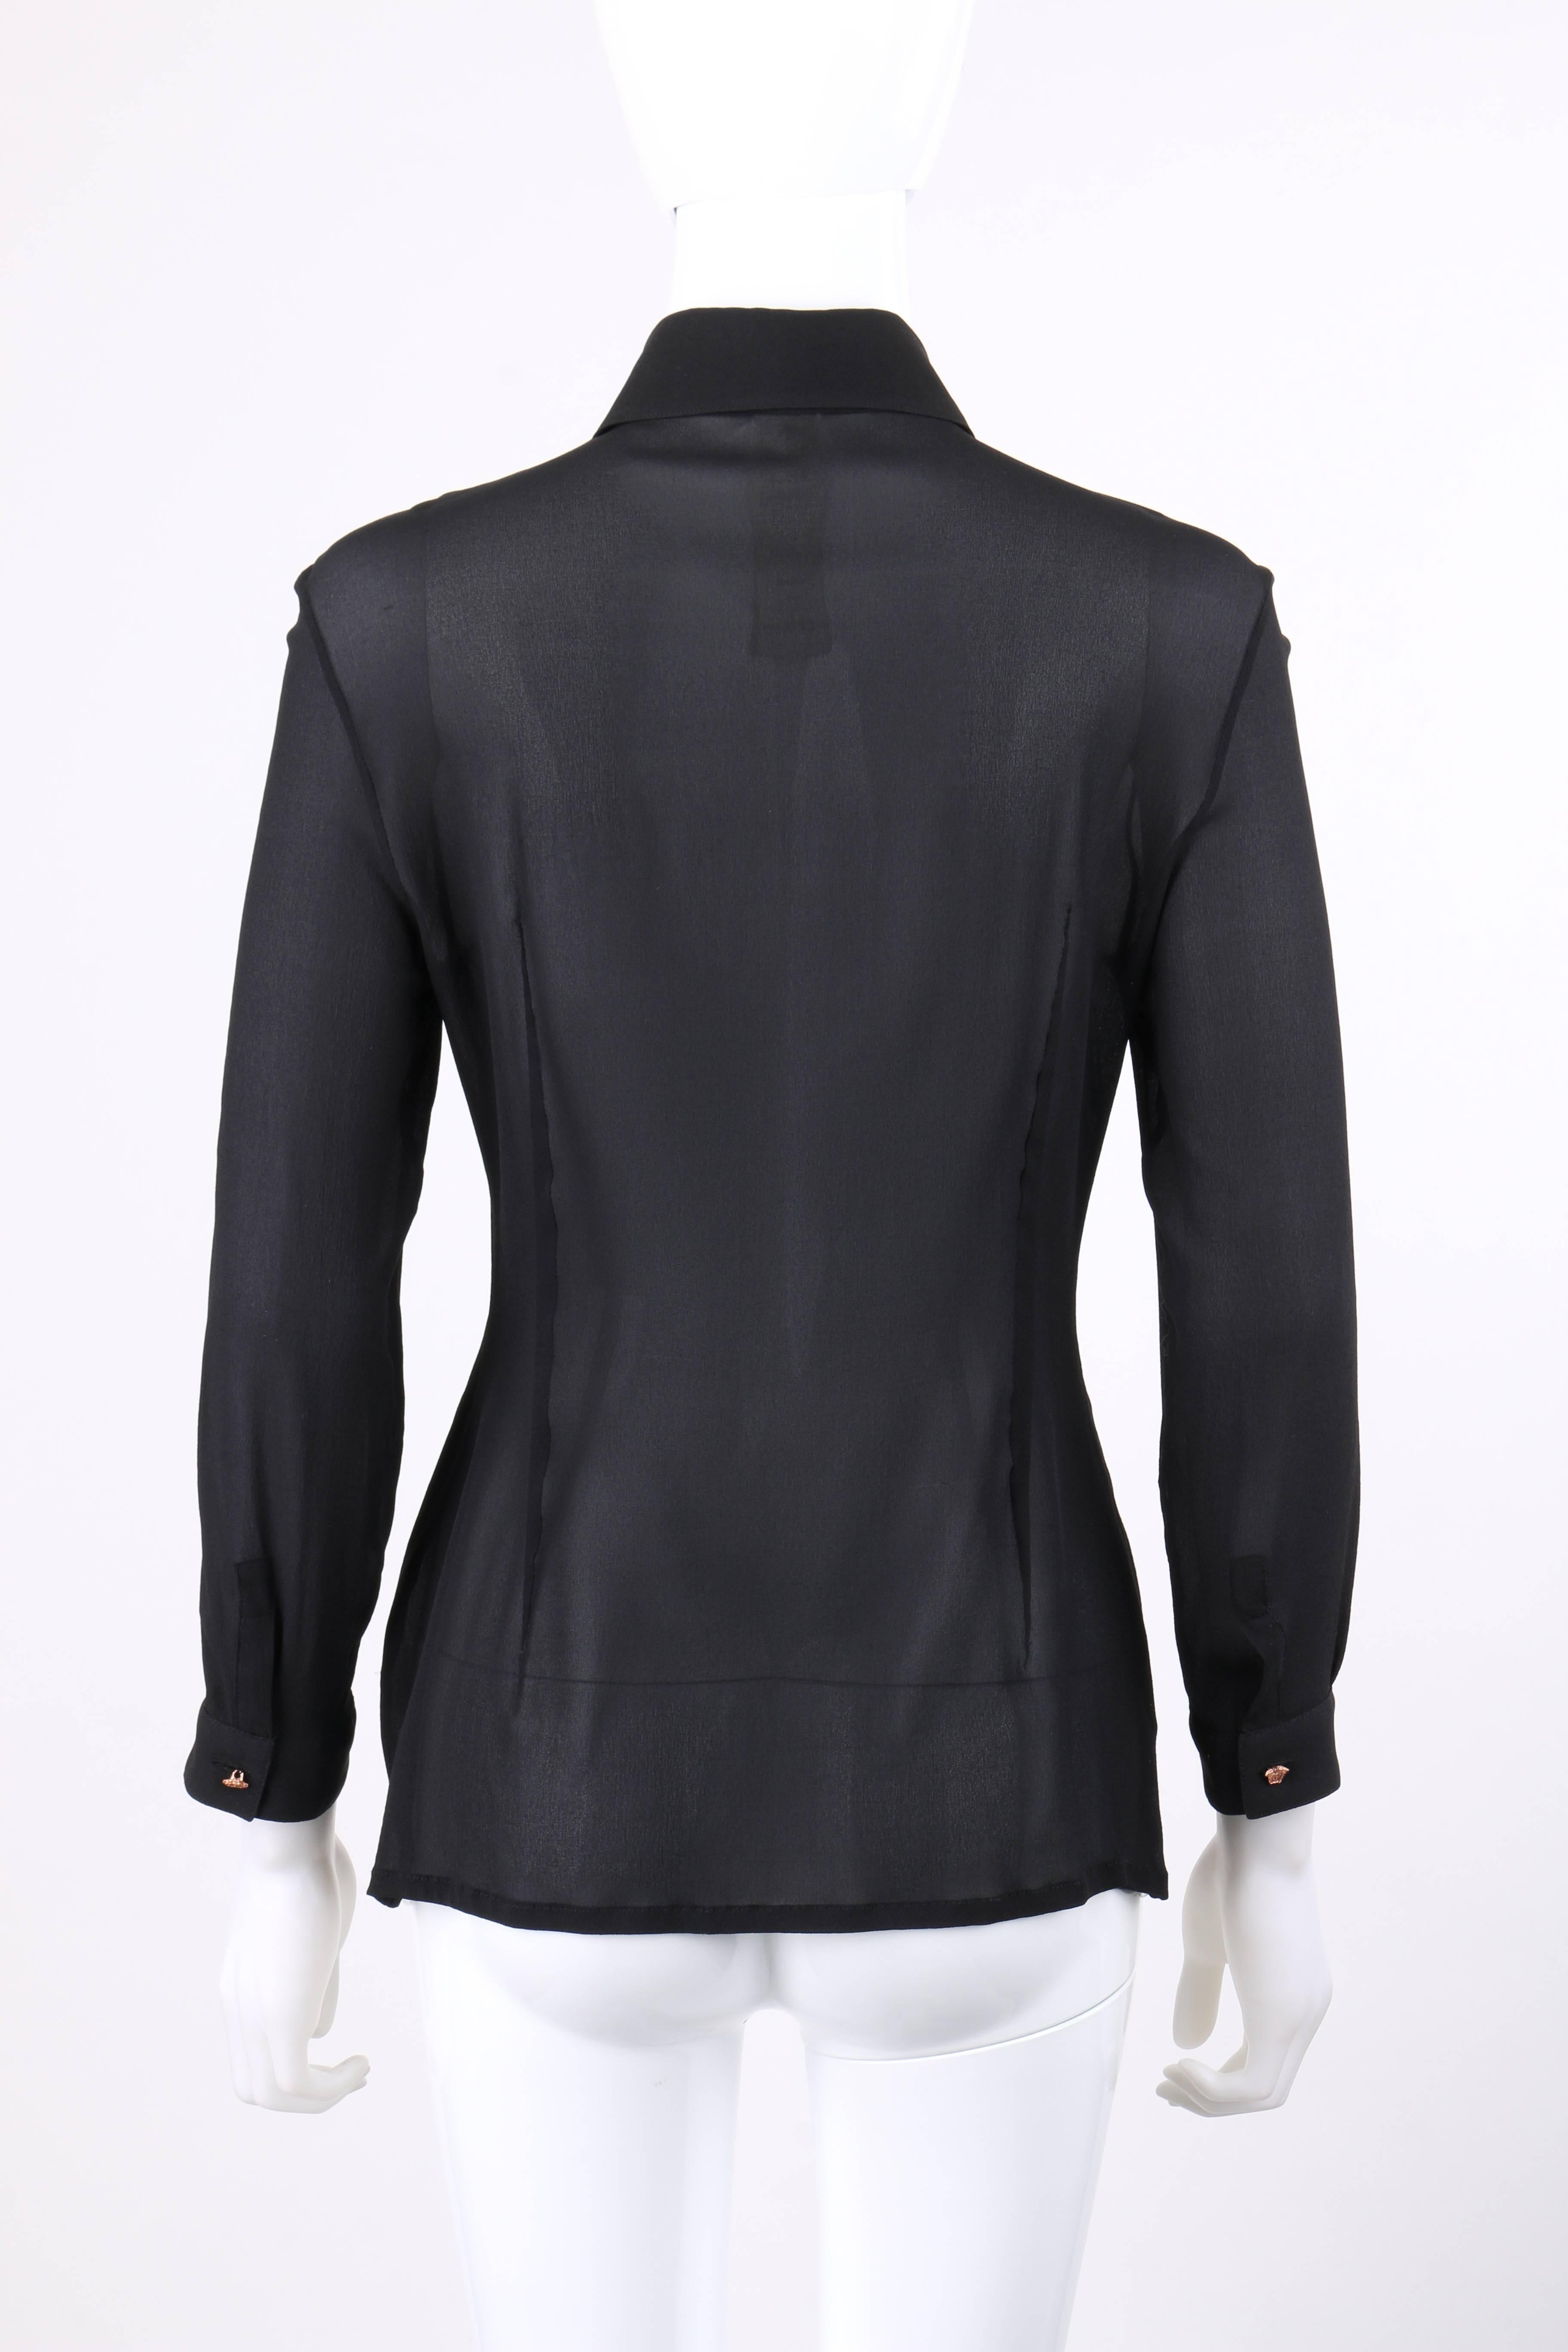 Women's GIANNI VERSACE Couture S/S 1999 Black Silk Chiffon Medusa Head Button Up Shirt